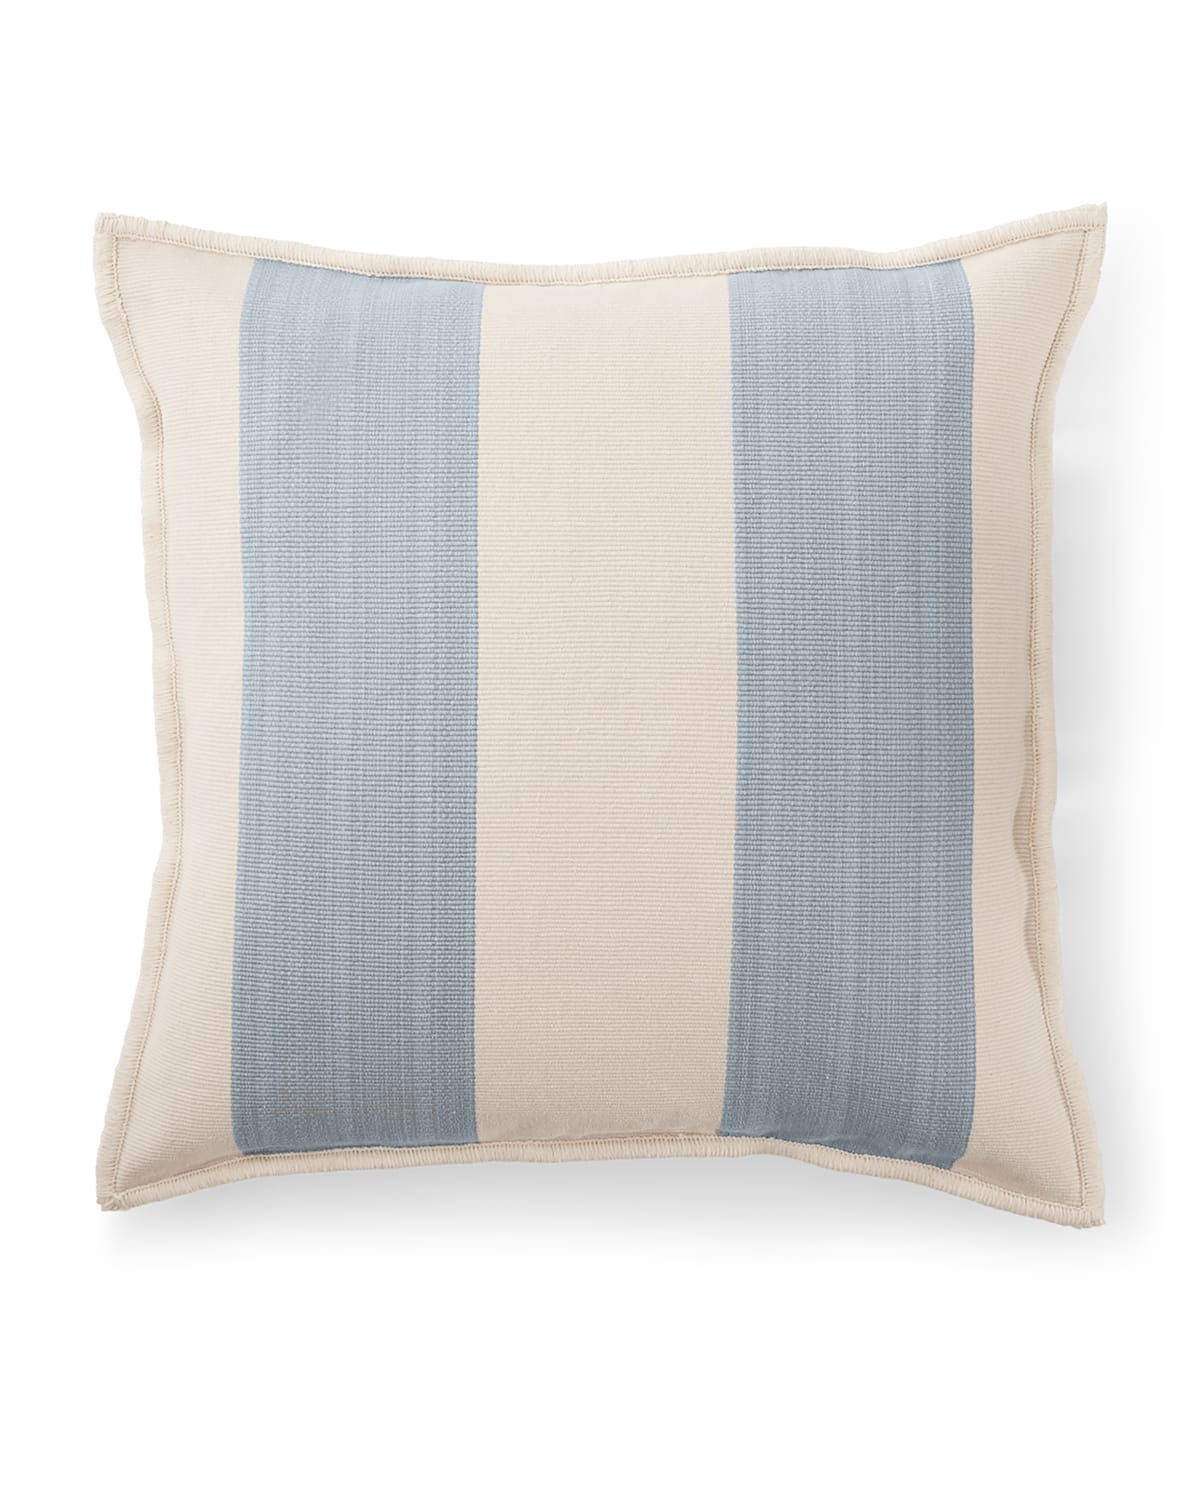 Image Lauren Ralph Lauren Graydon Ticking Decorative Pillow, 20"Sq.